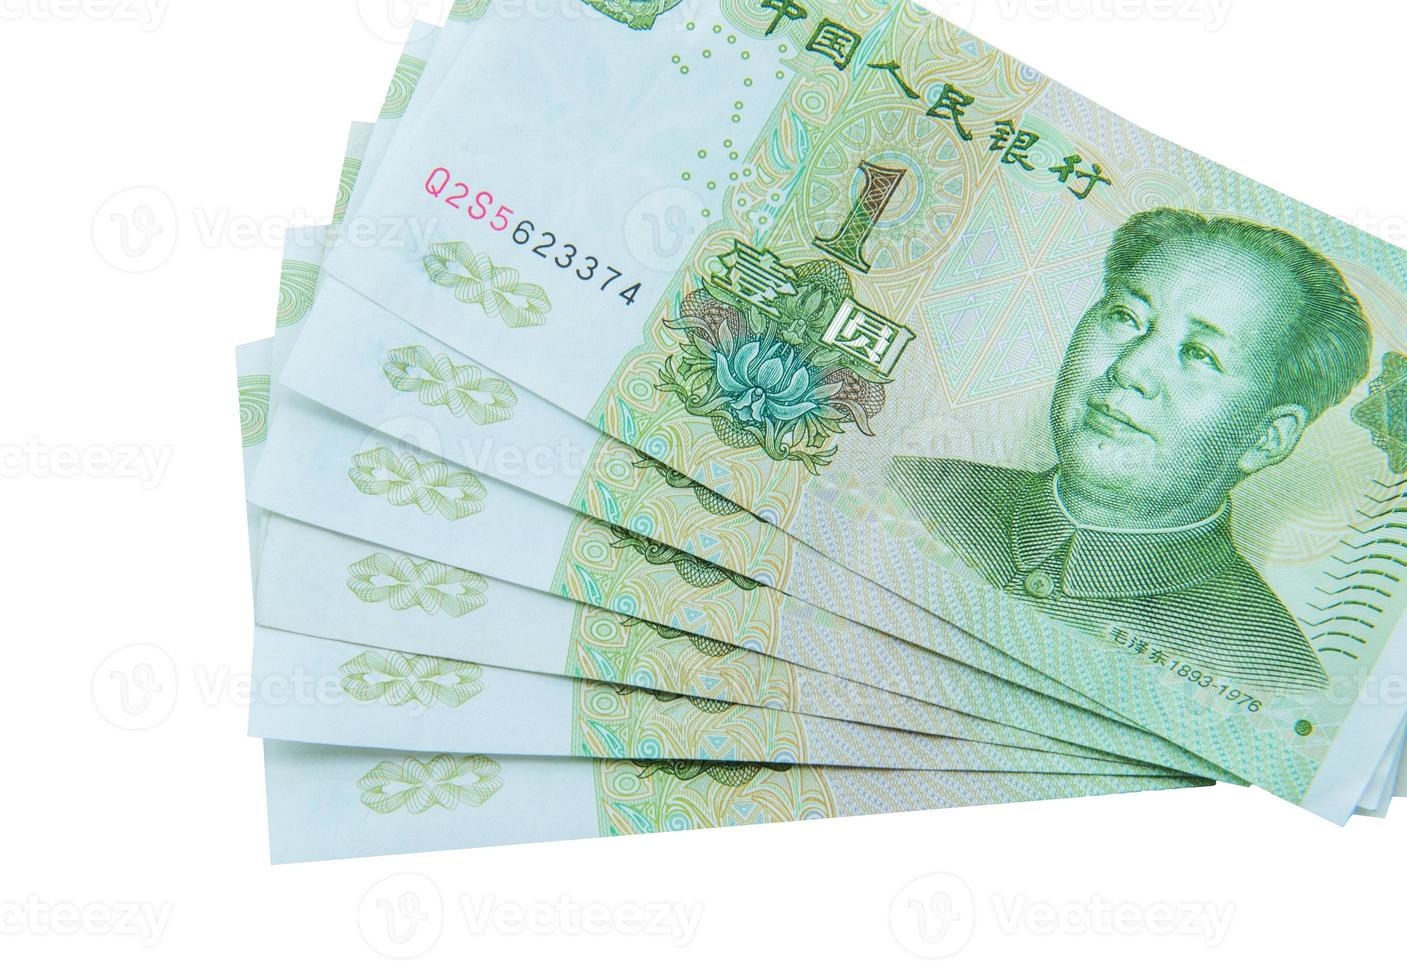 Chinese valuta - rmb foto